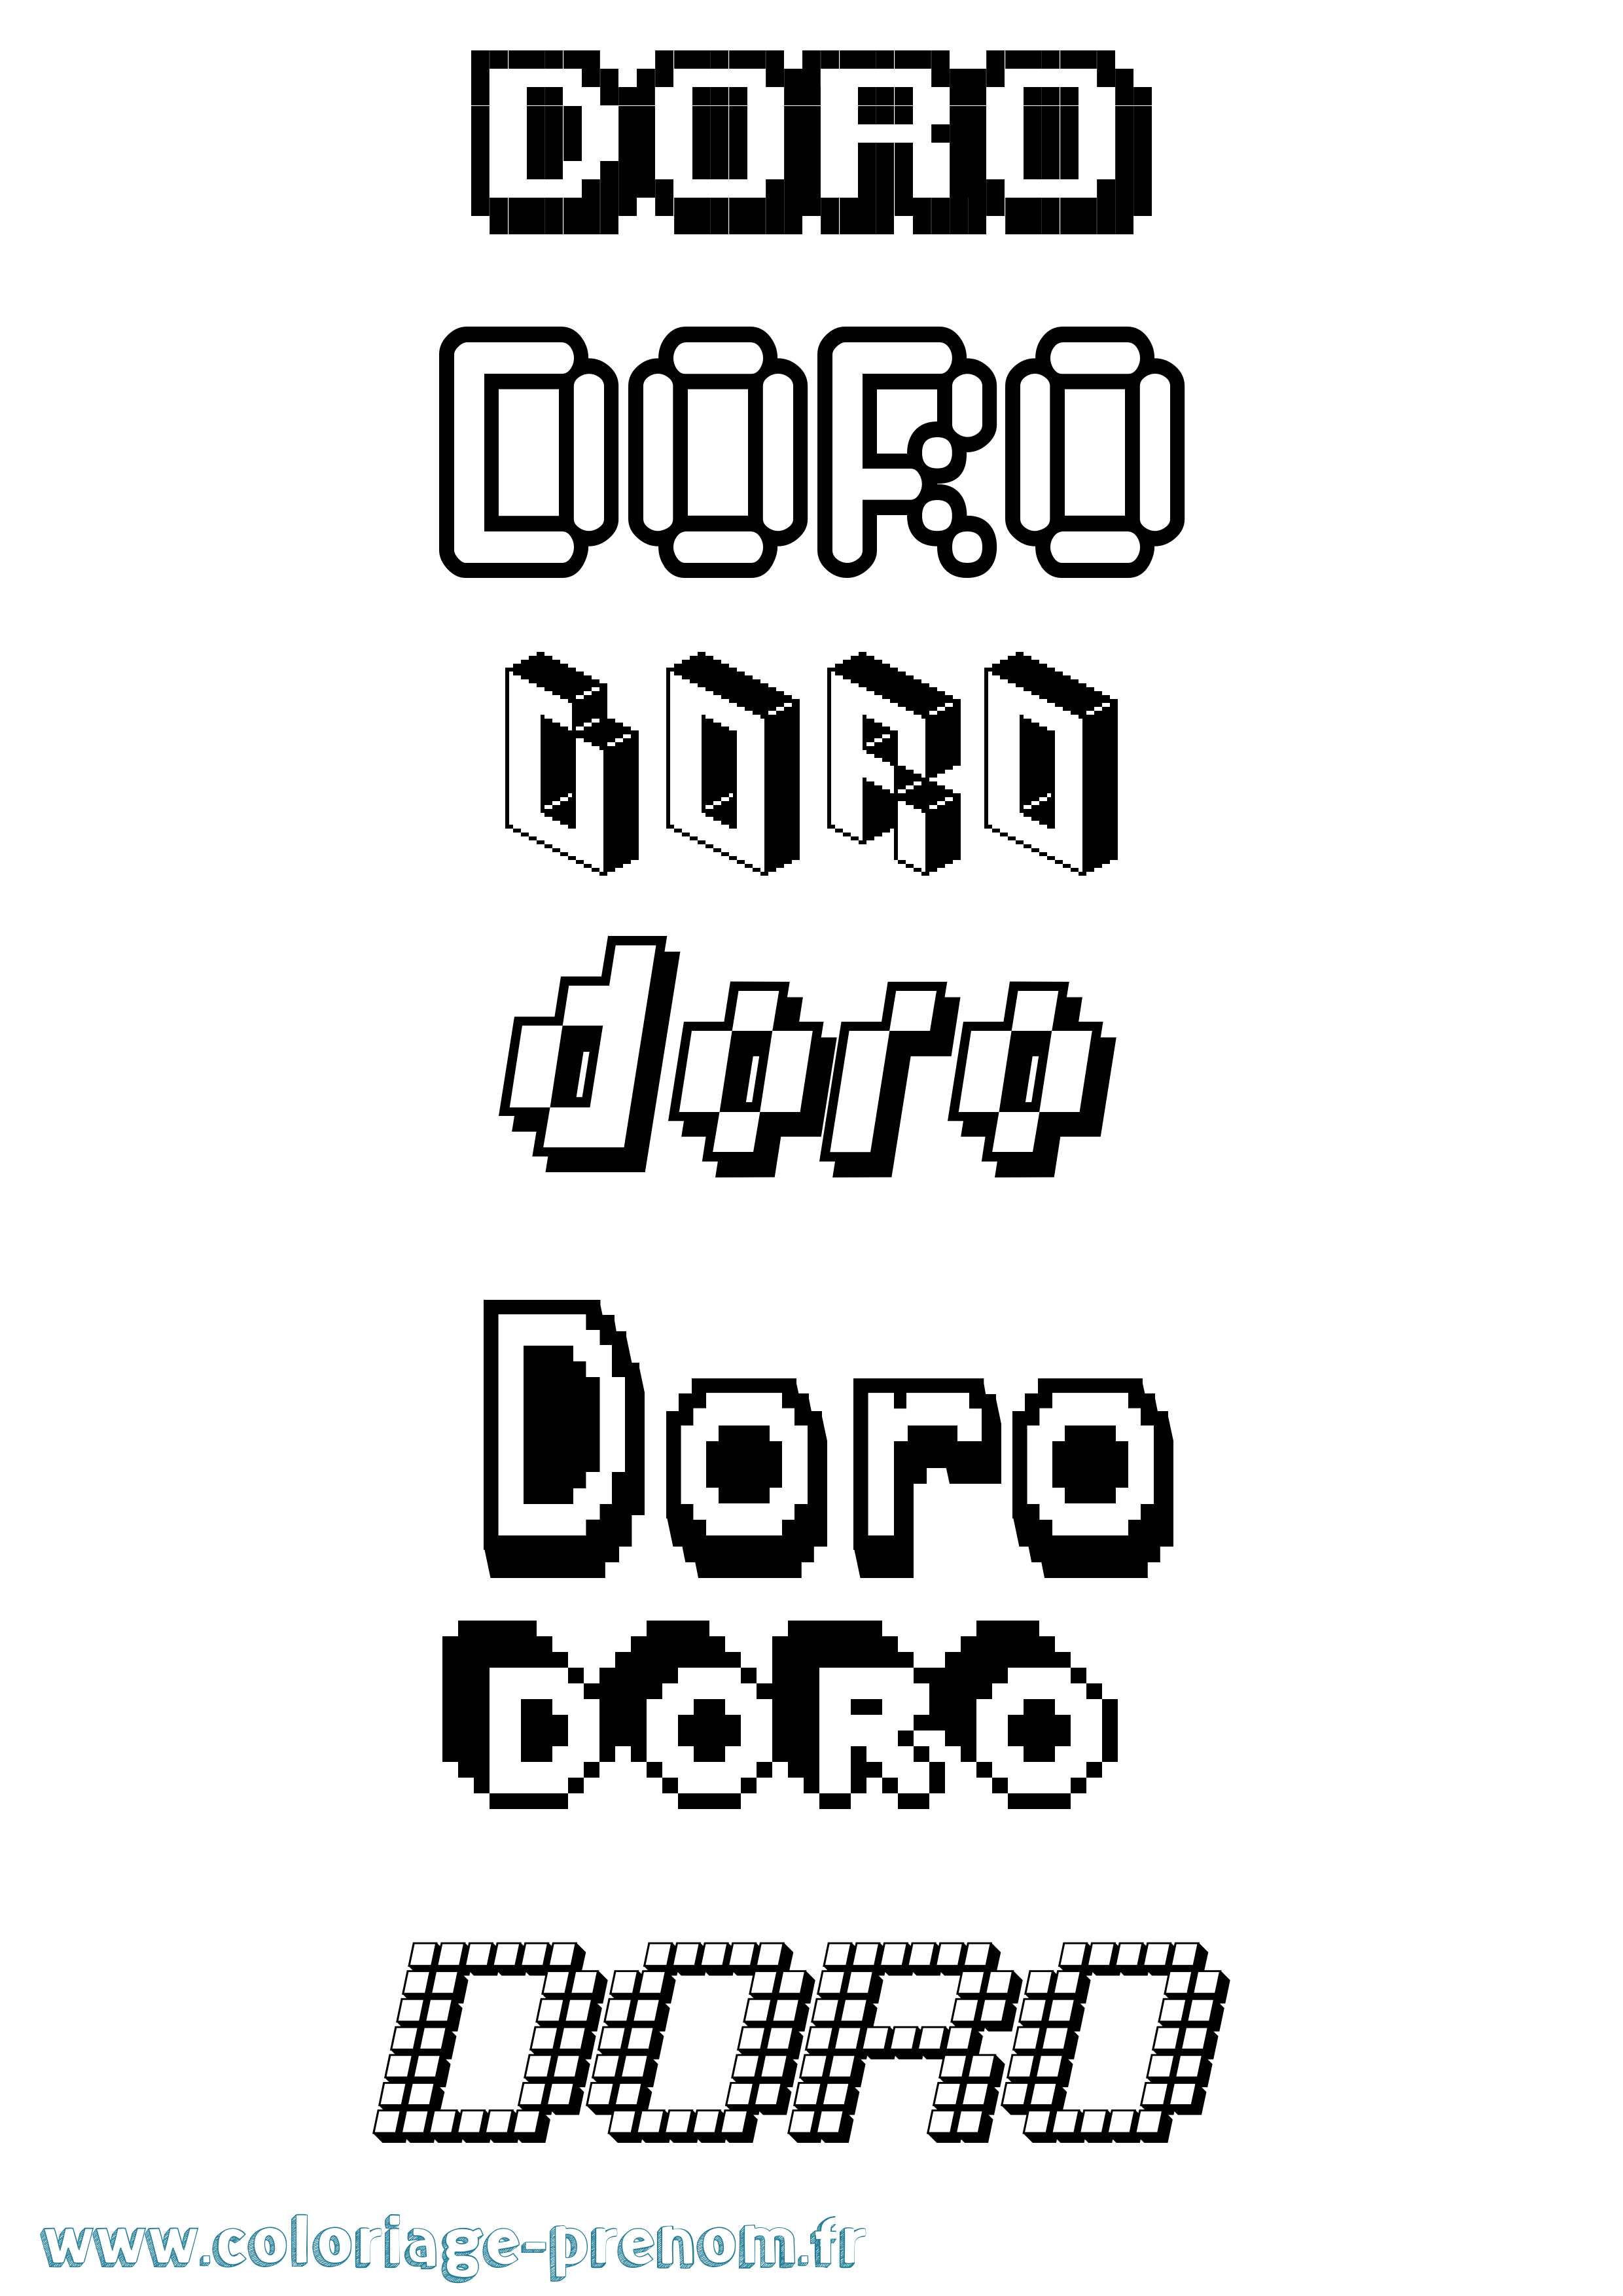 Coloriage prénom Doro Pixel